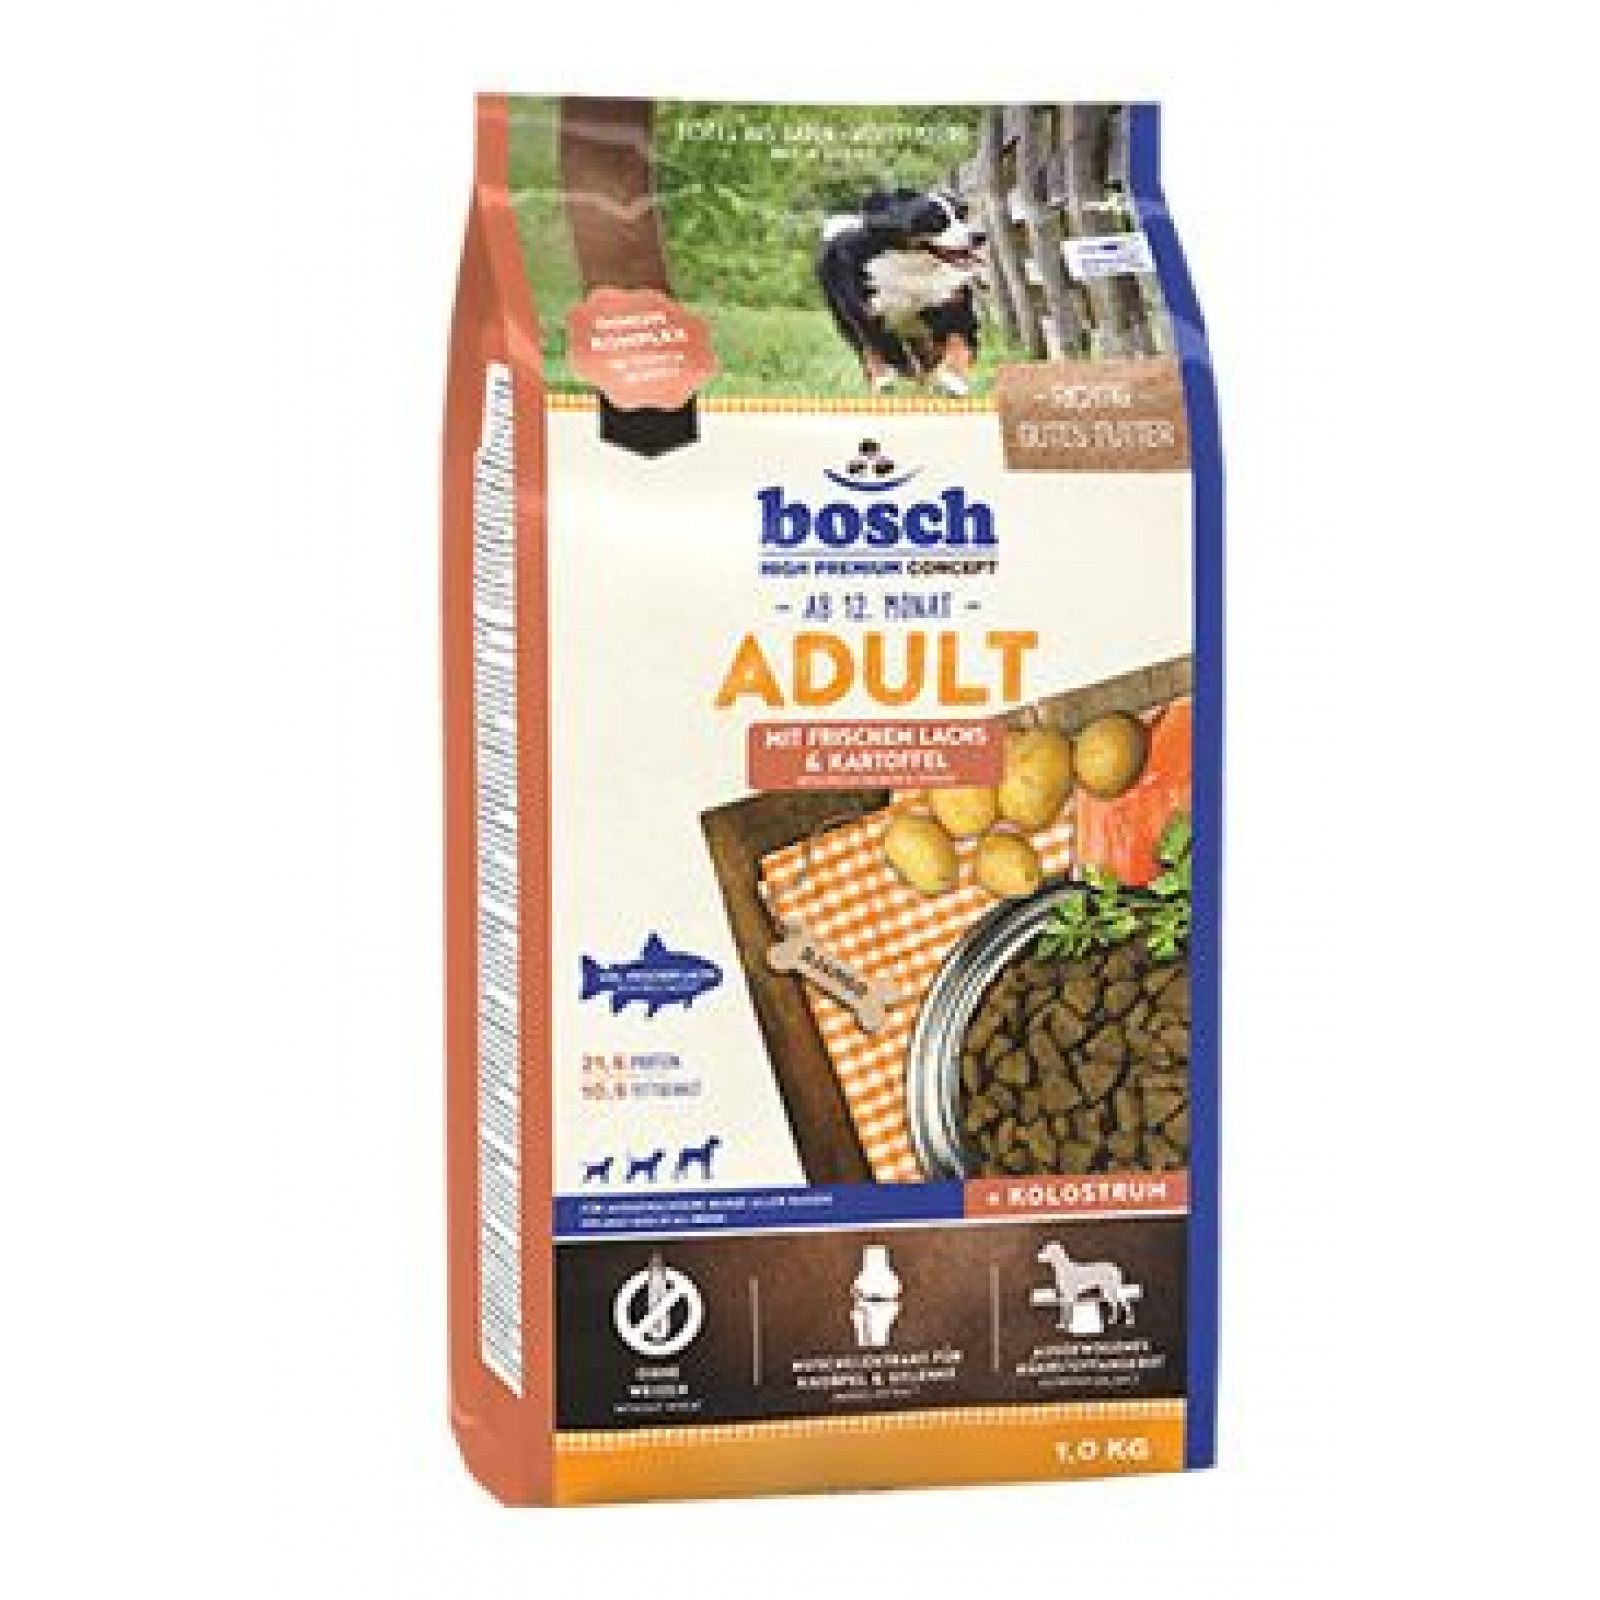 Bosch Dog Adult Salmon & Potato 3kg